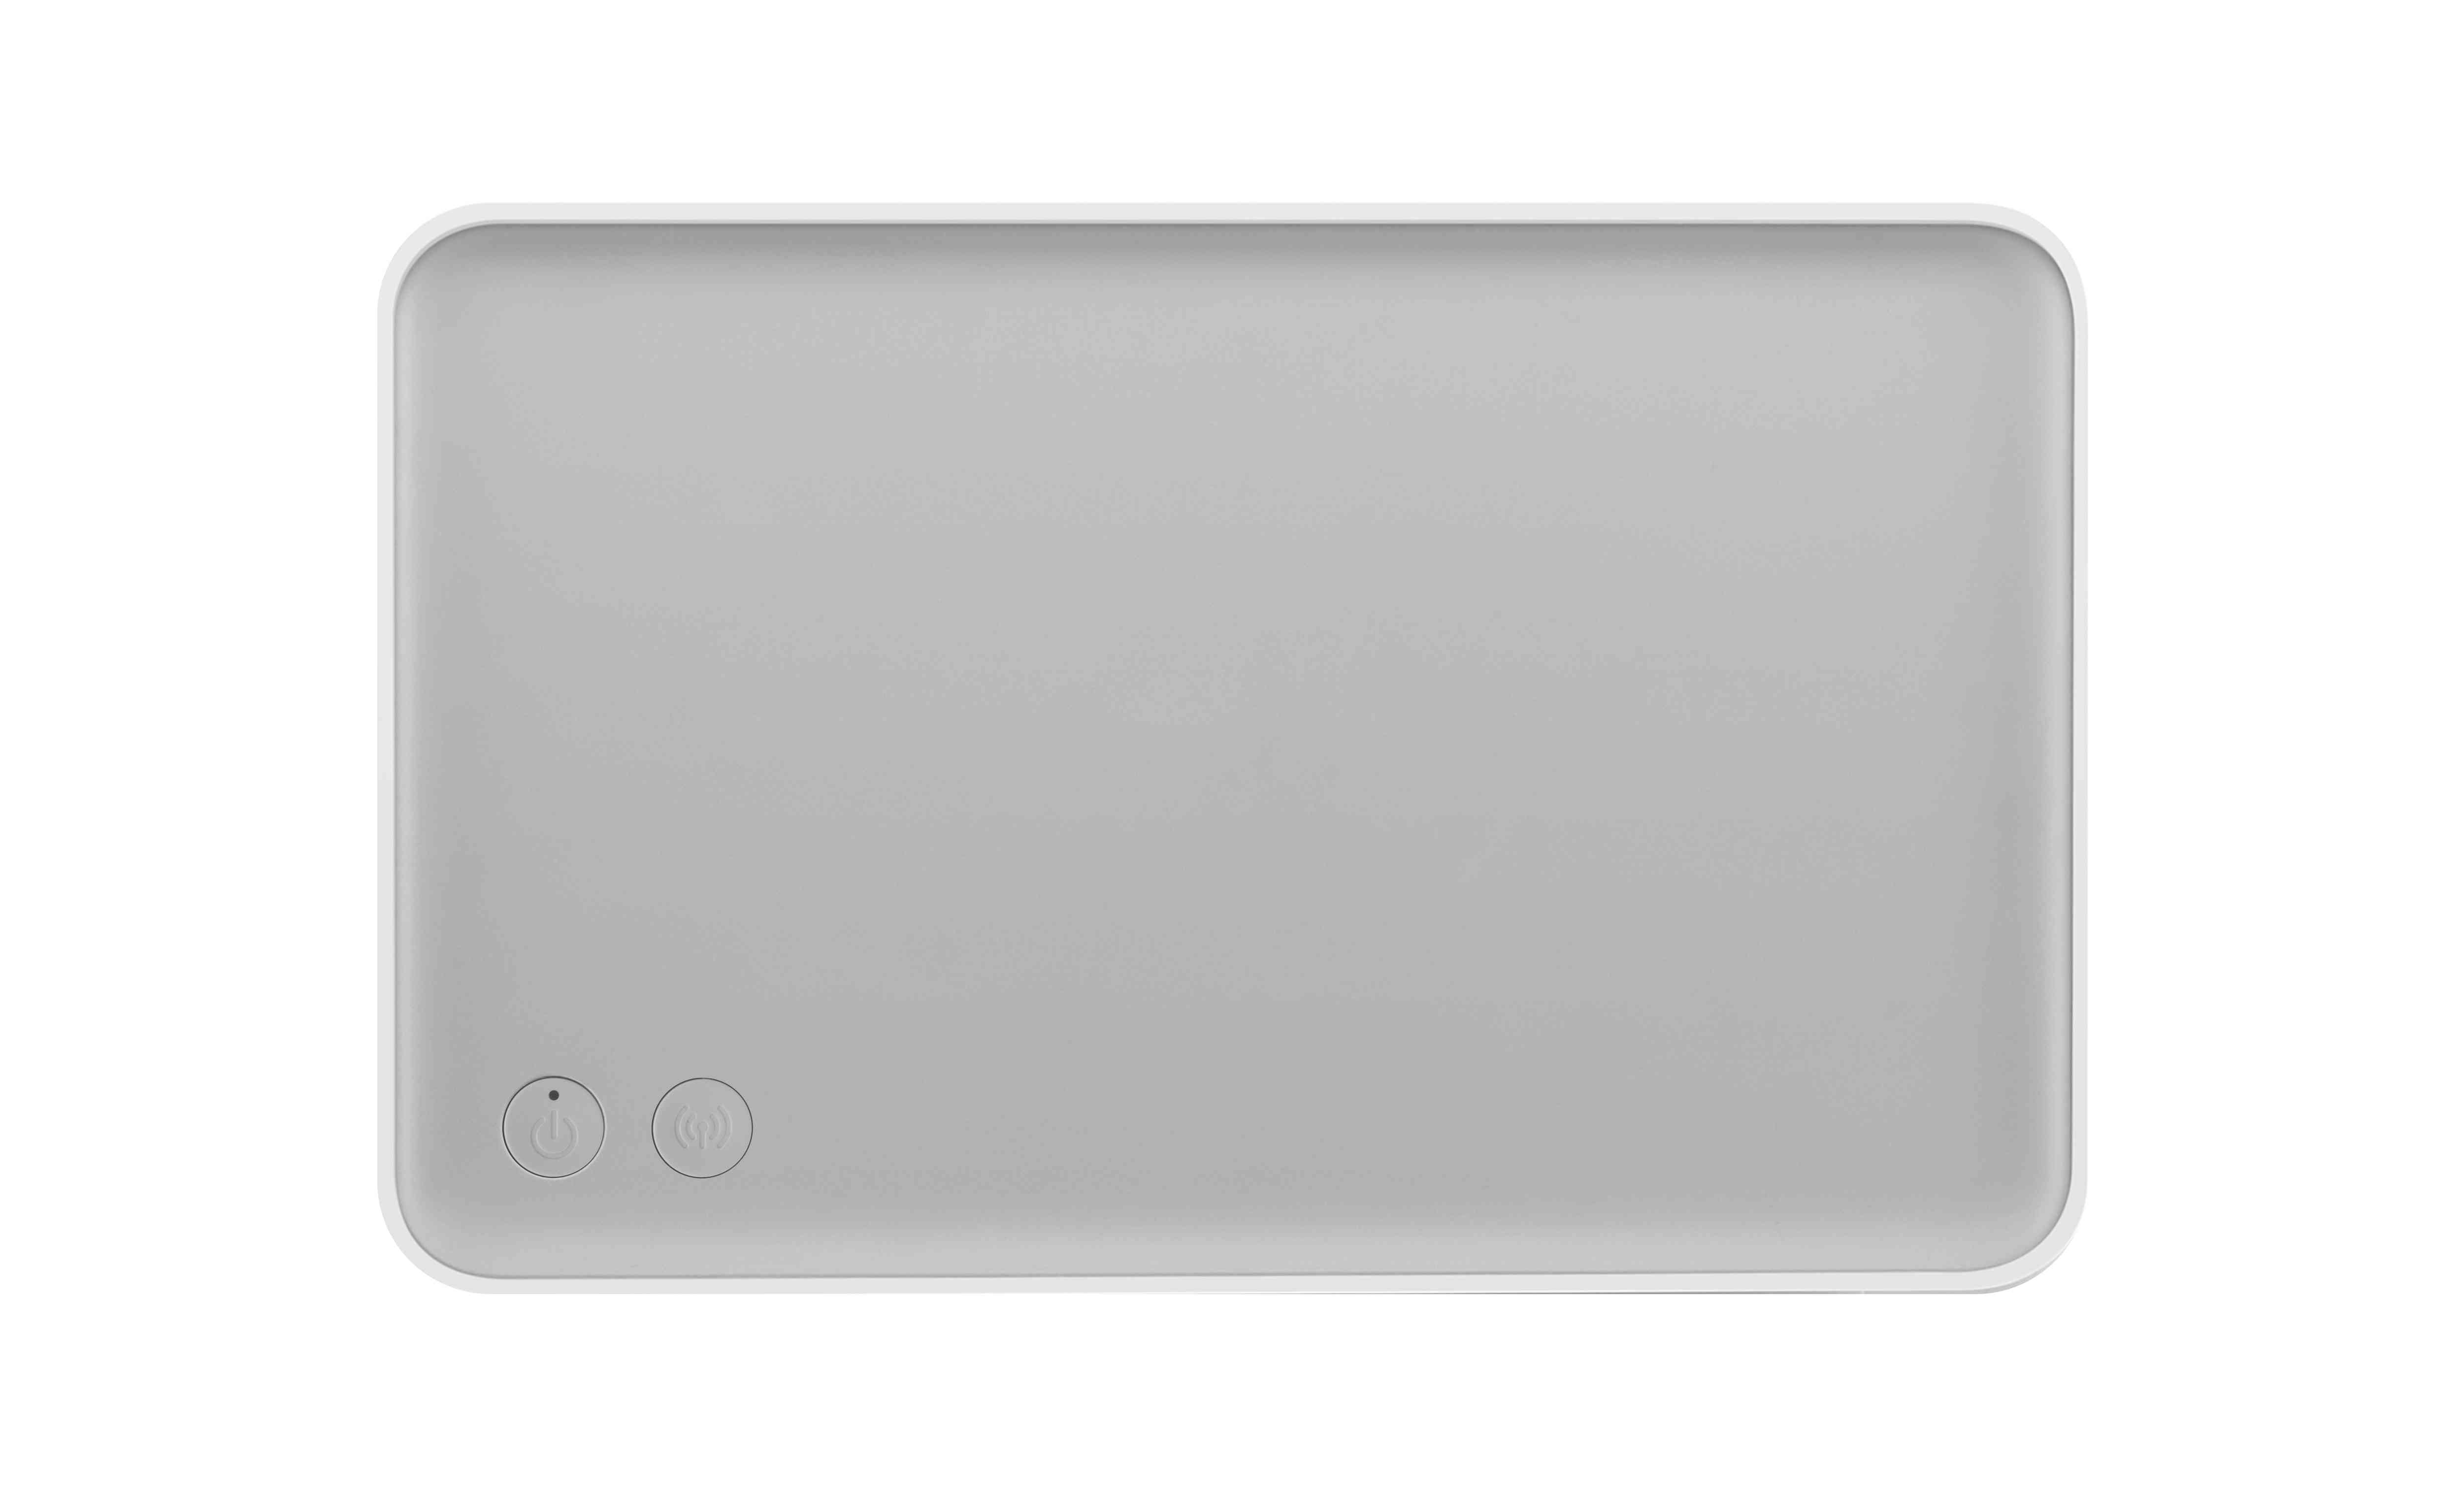 Obrázek Xiaomi Instant Photo Printer/1S Set EU/Tisk/Wi-Fi